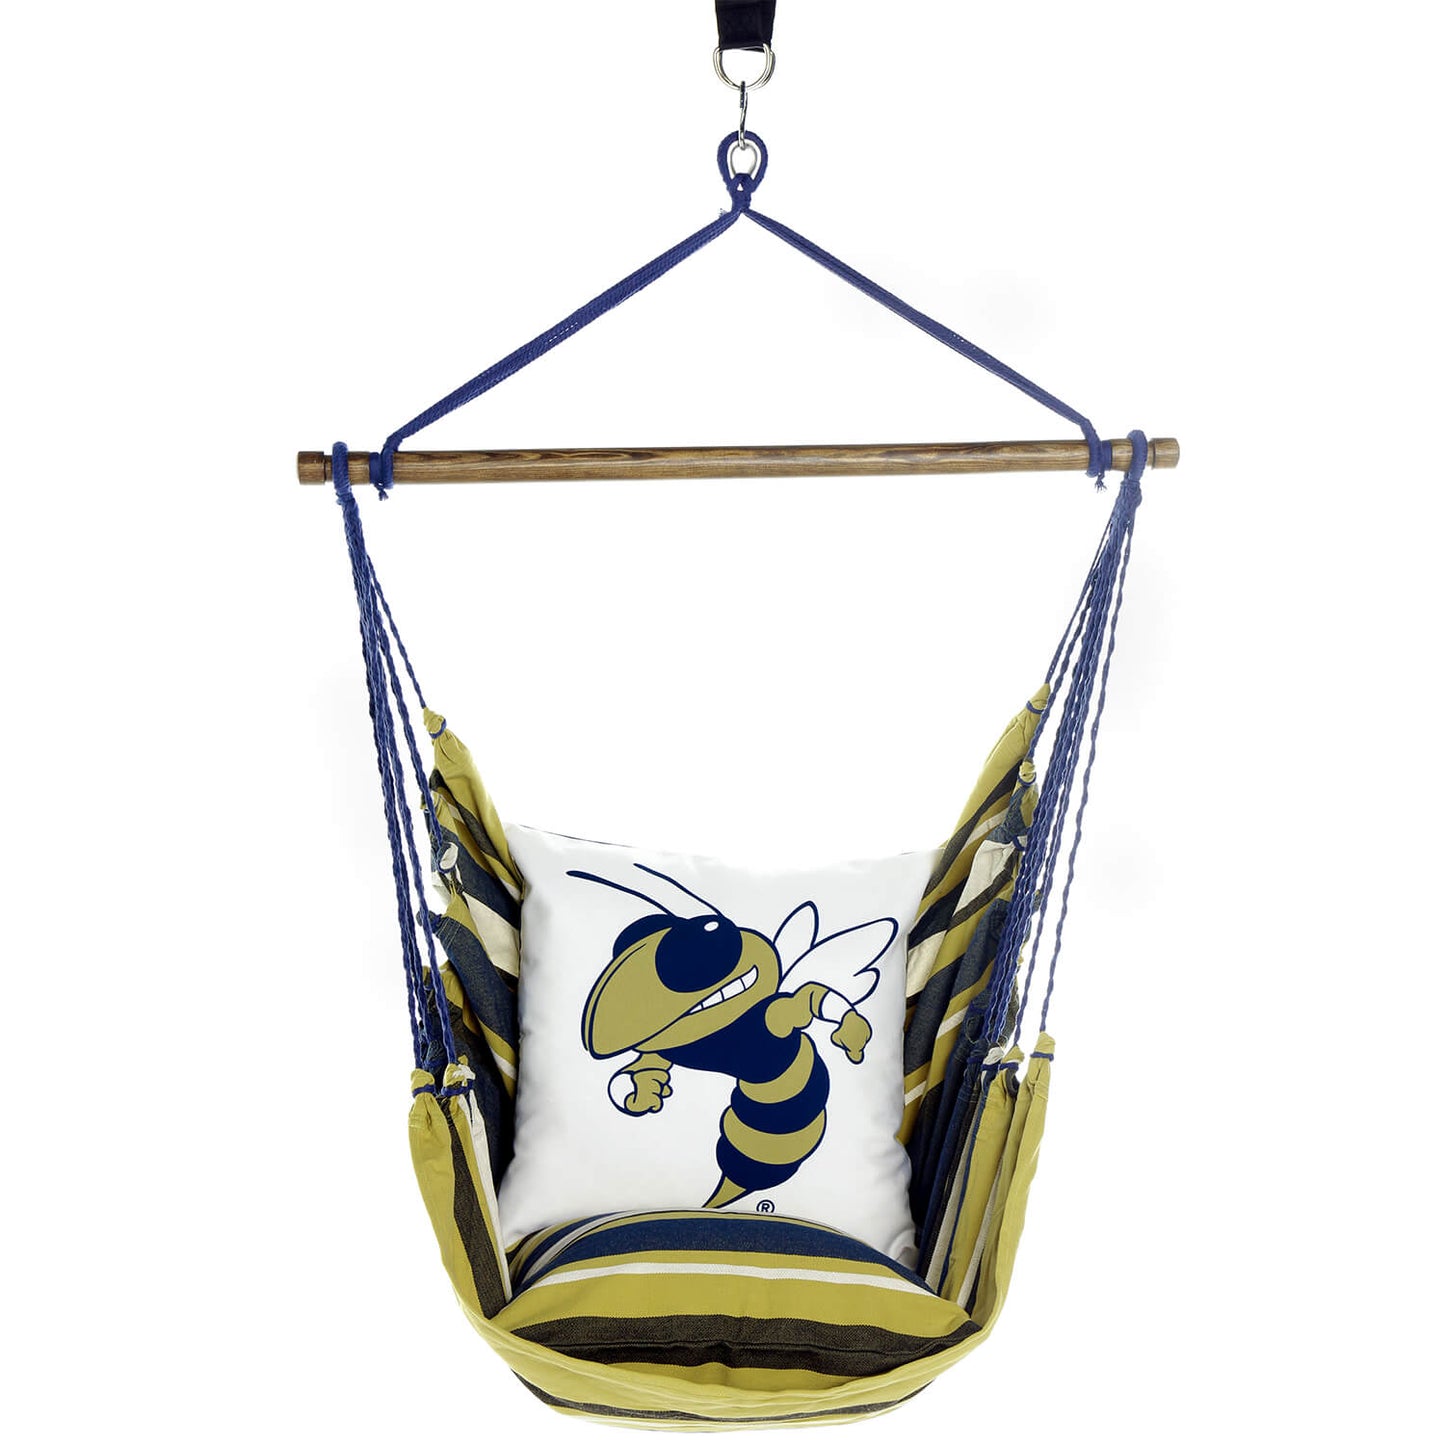 Georgia-Tech-Yellow-Jackets-Mascot-Hanging-Chair